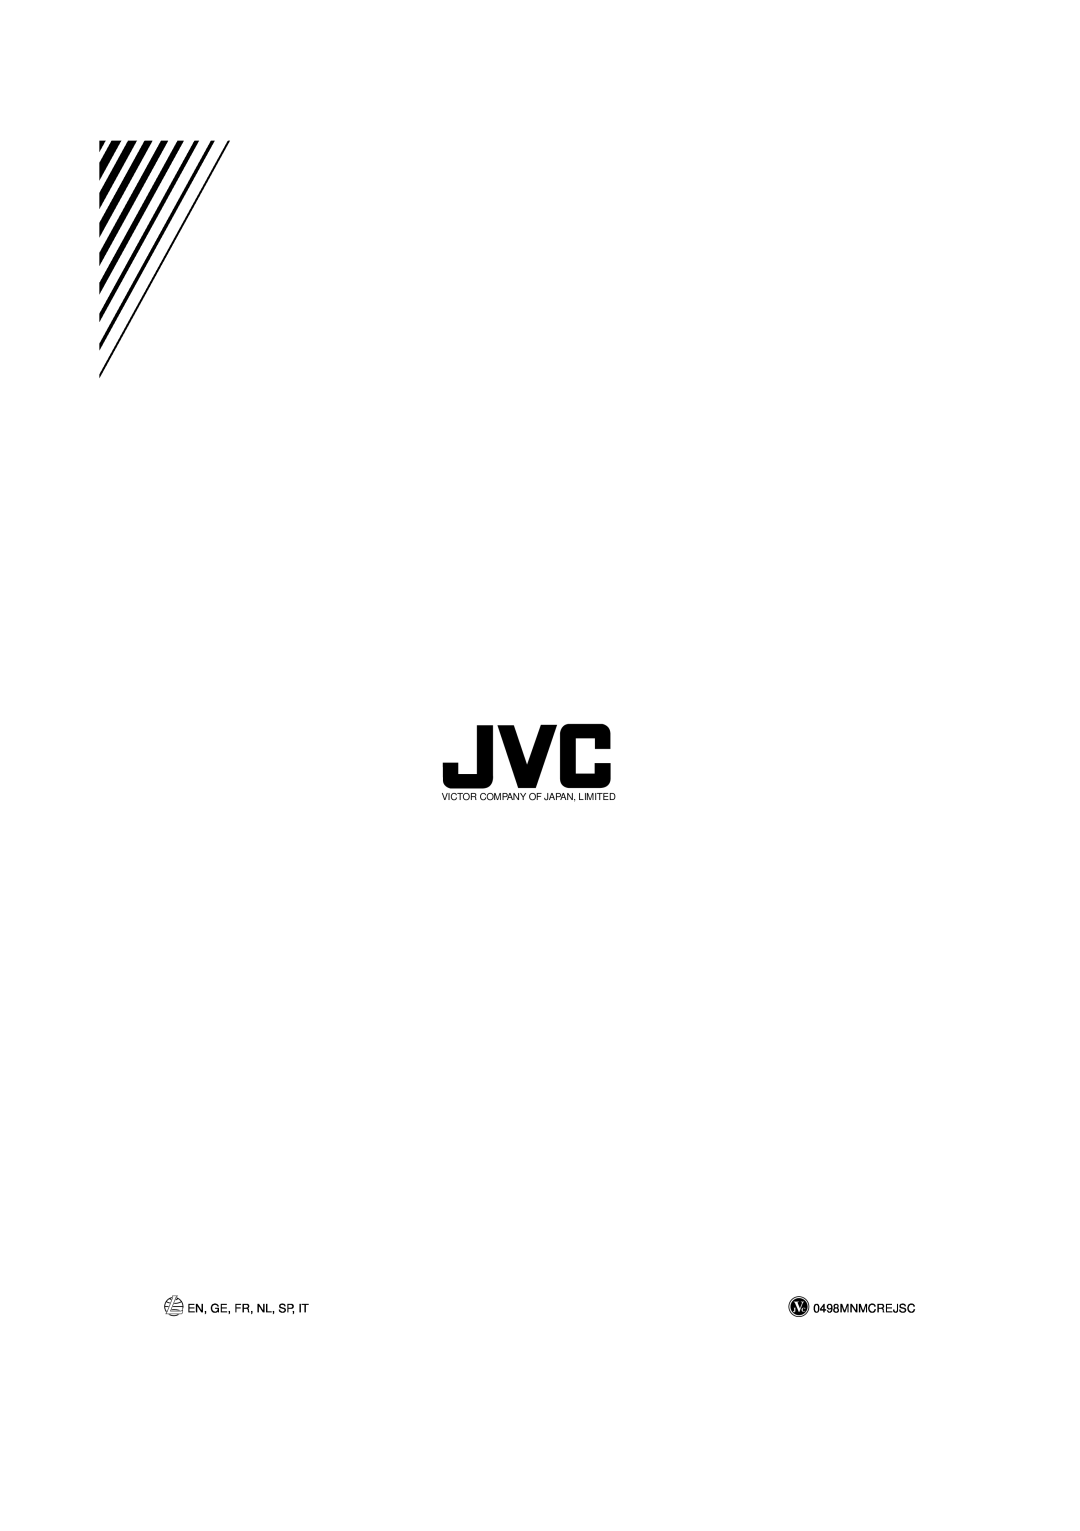 JVC UX-5500R manual En, Ge, Fr, Nl, Sp, It, 0498MNMCREJSC, Victor Company Of Japan, Limited 